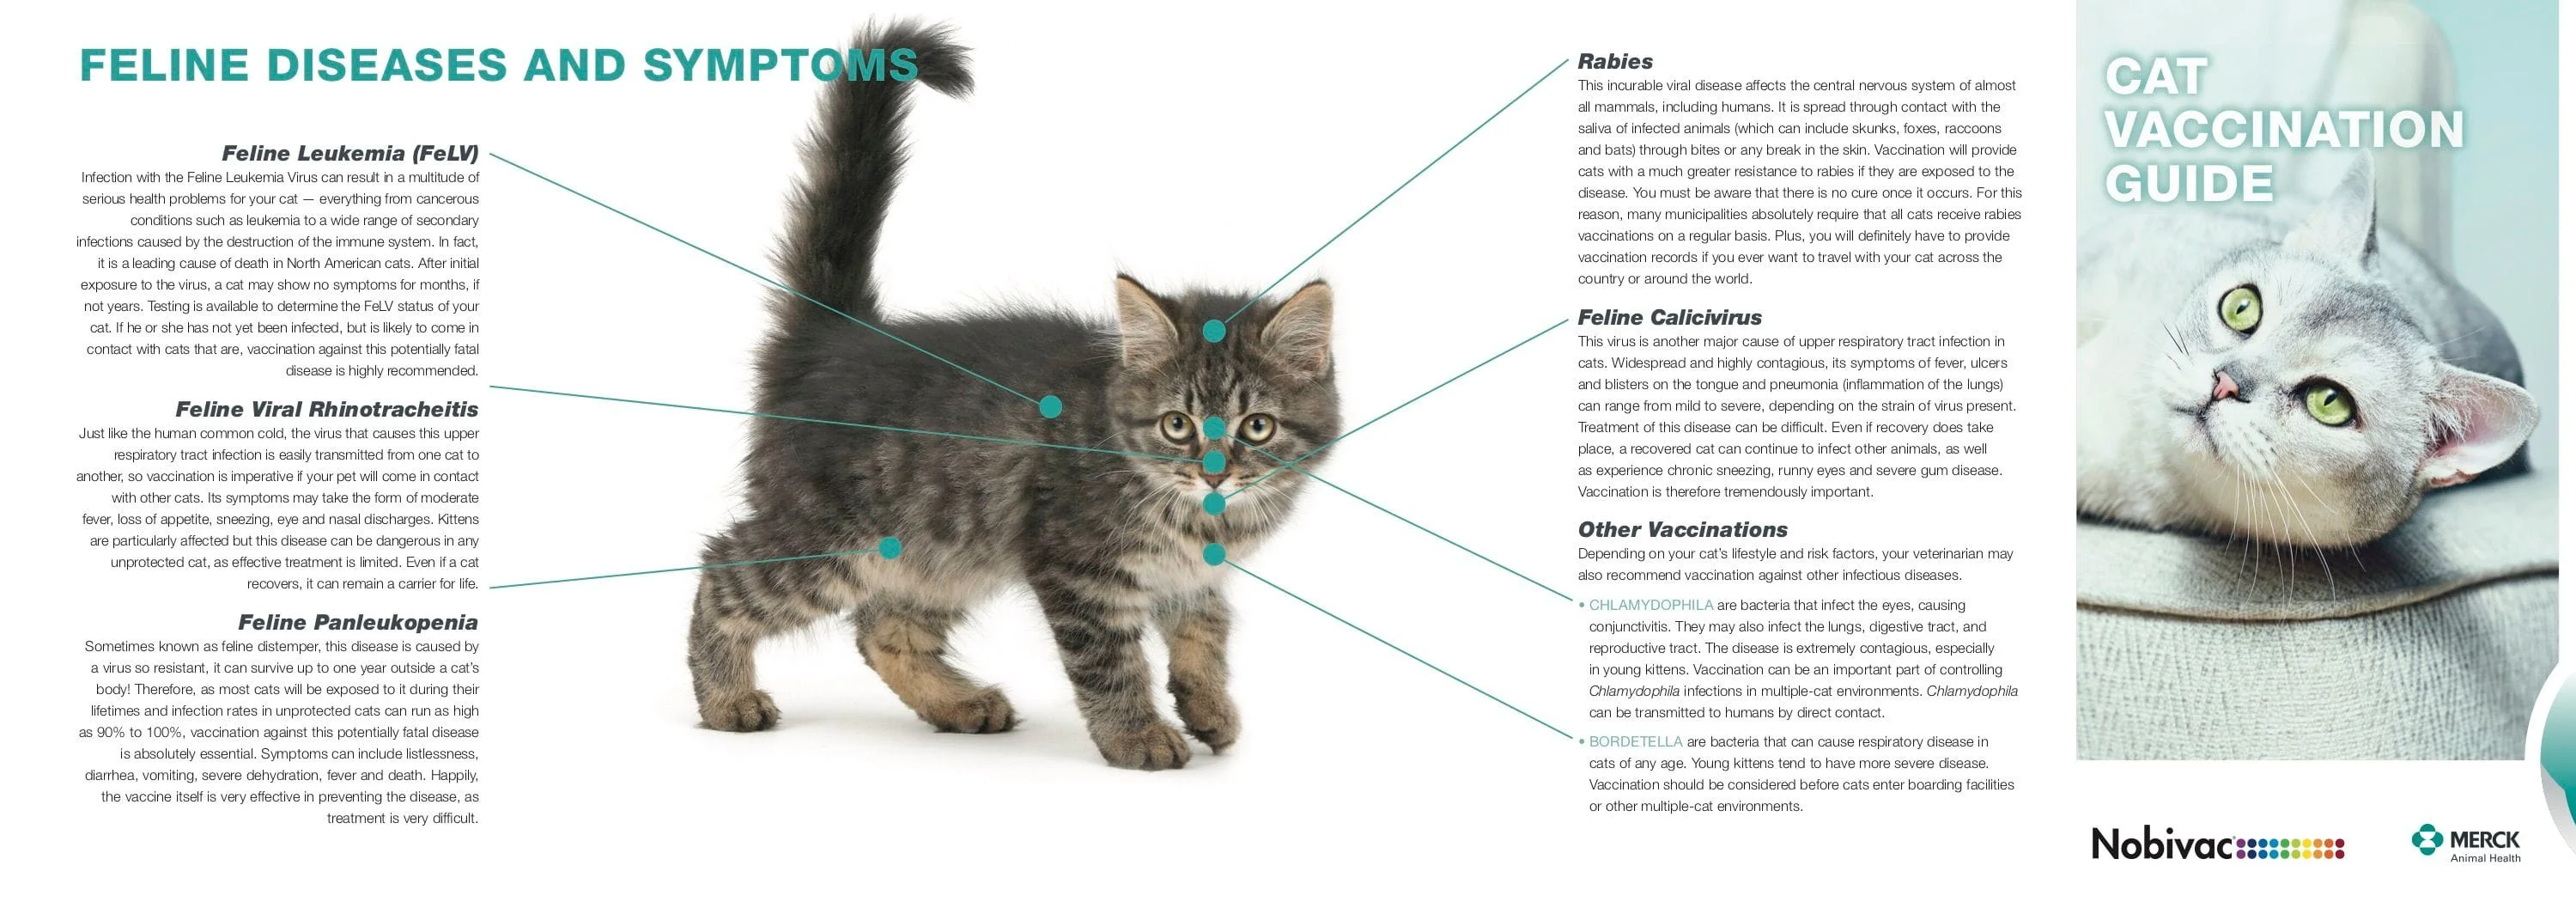 Feline Vaccine Guide